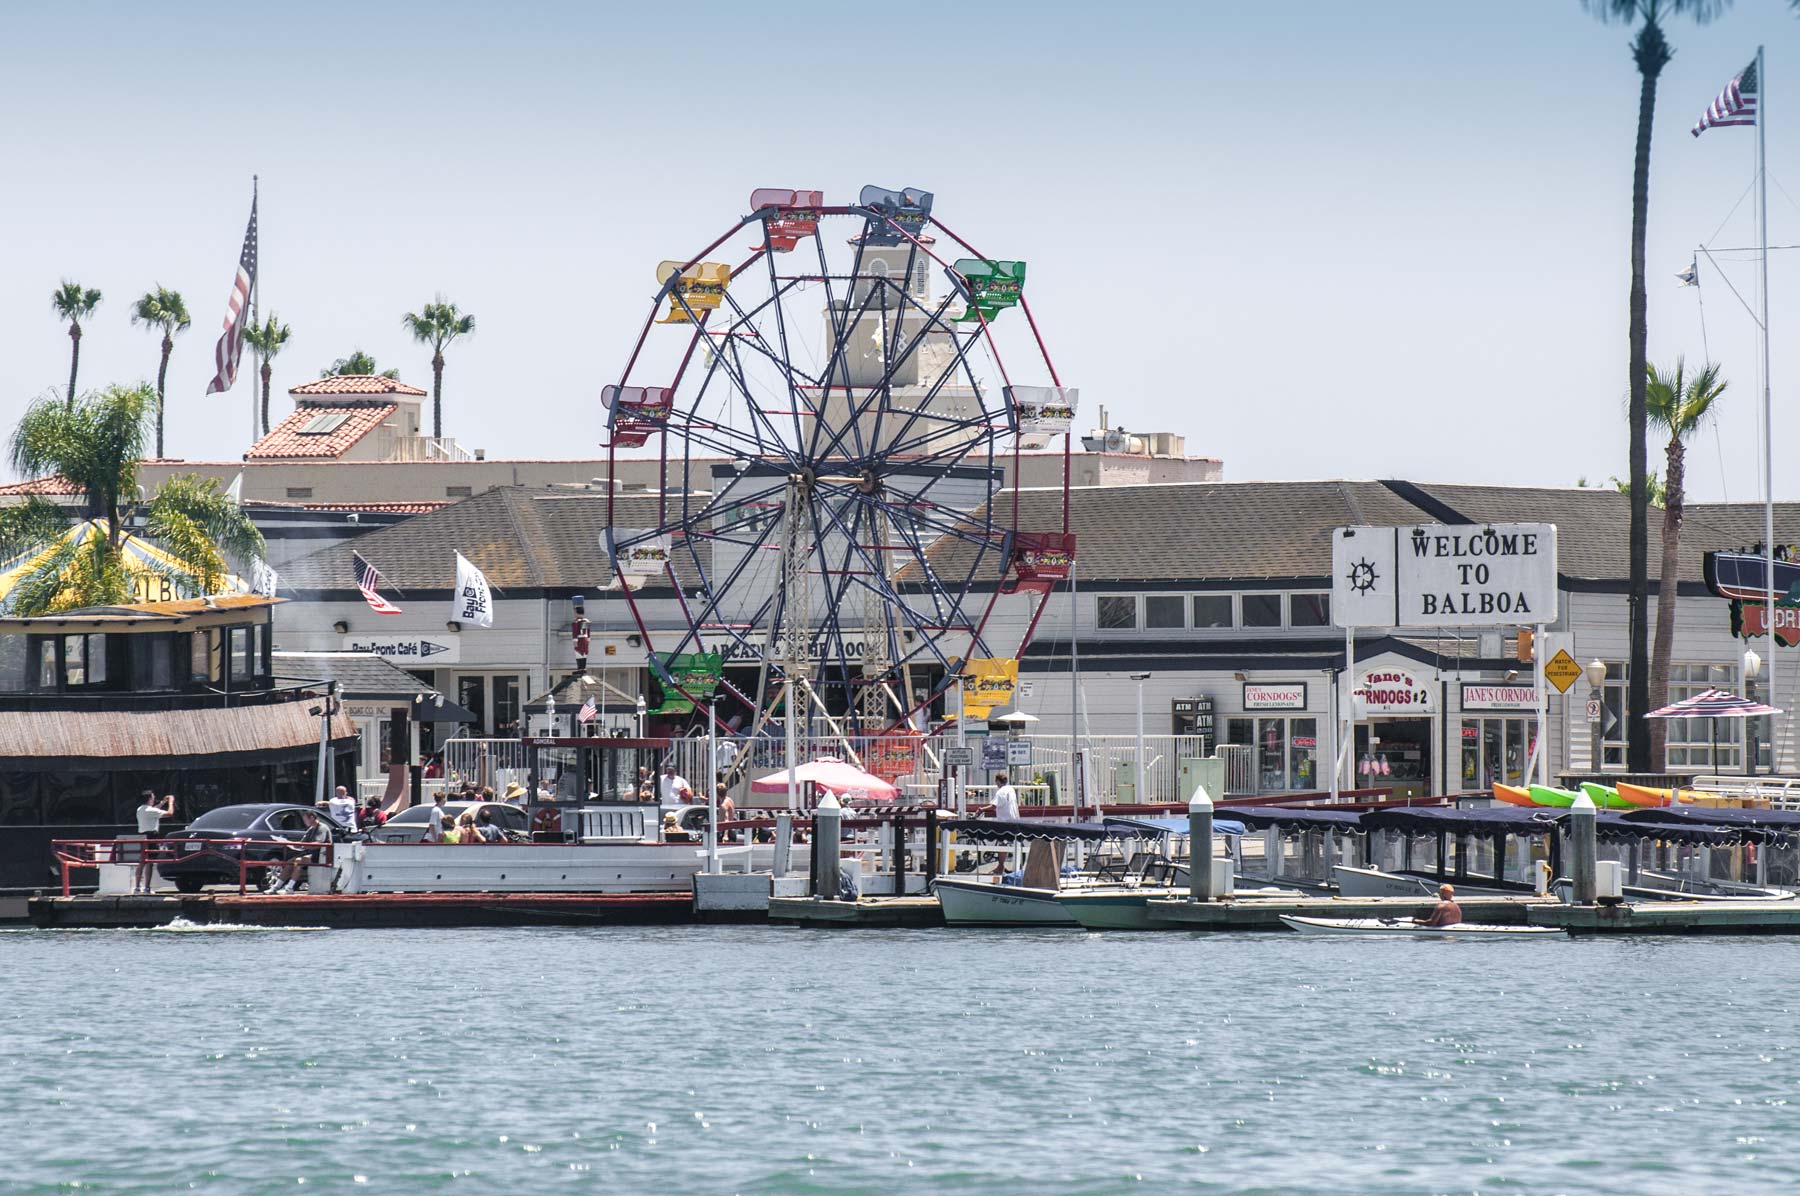 Balboa Fun Zone and Ferris Wheel